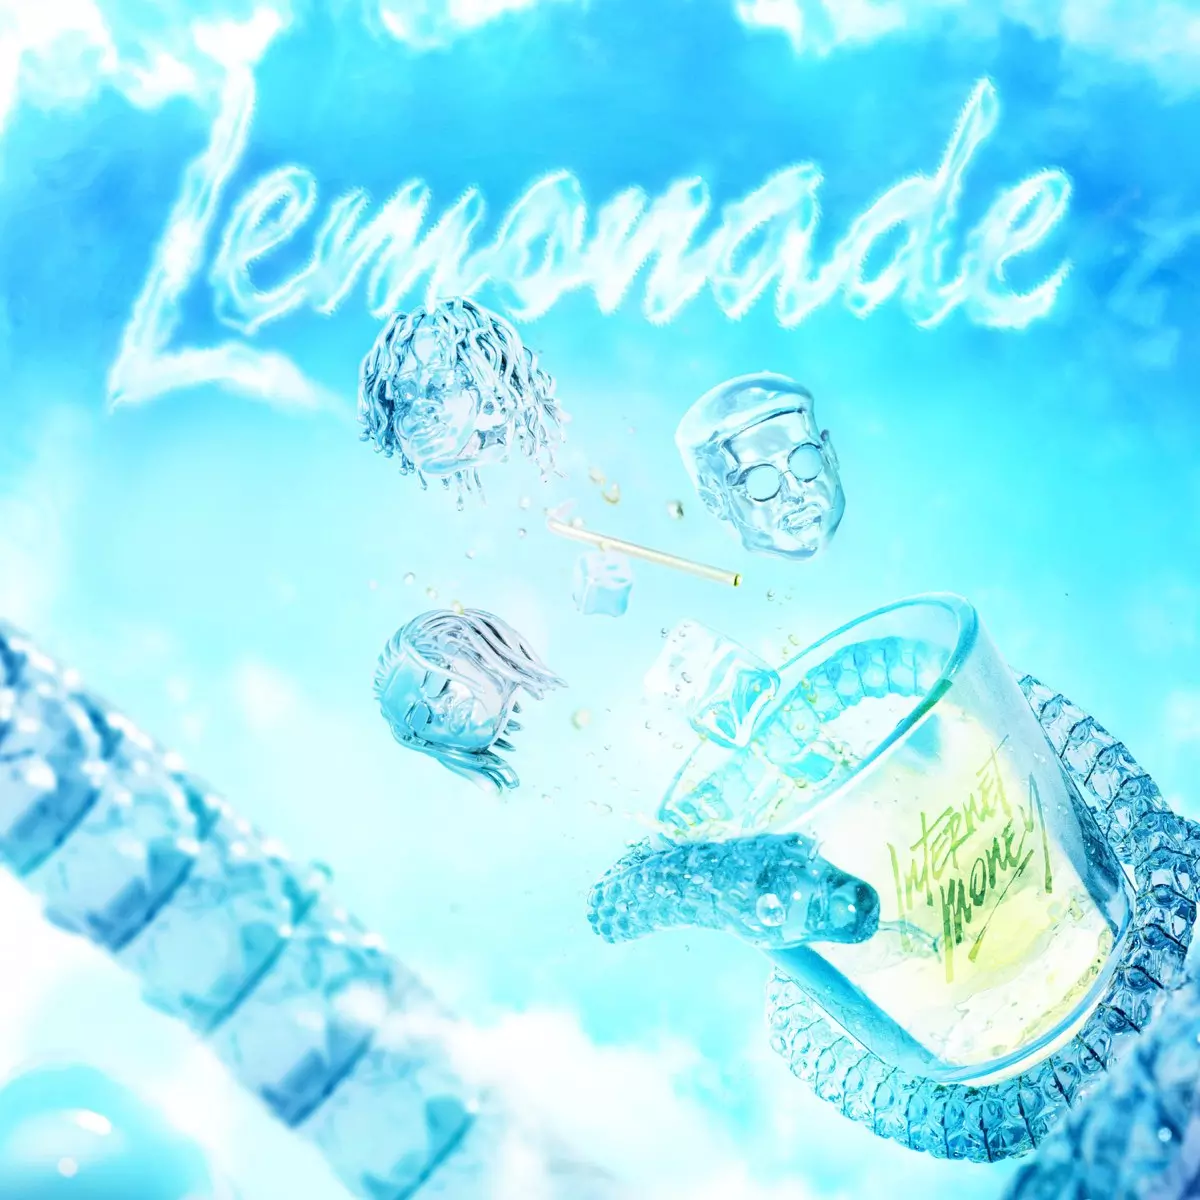 Lemonade (feat. NAV) - Single by Internet Money, Gunna & Don Toliver on Apple Music